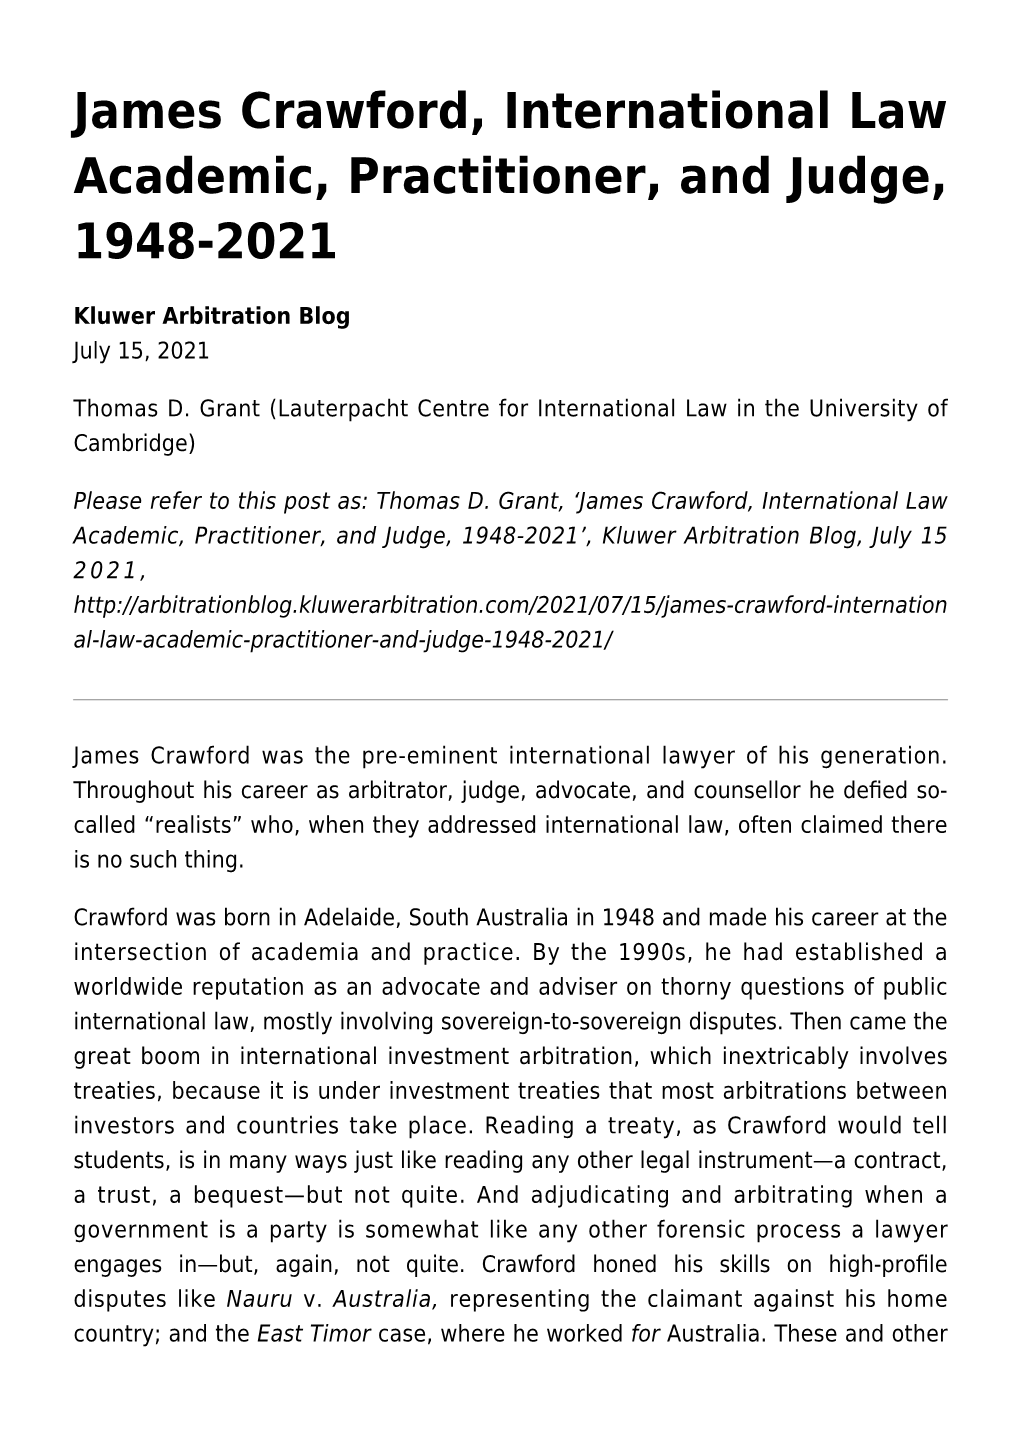 James Crawford, International Law Academic, Practitioner, and Judge, 1948-2021